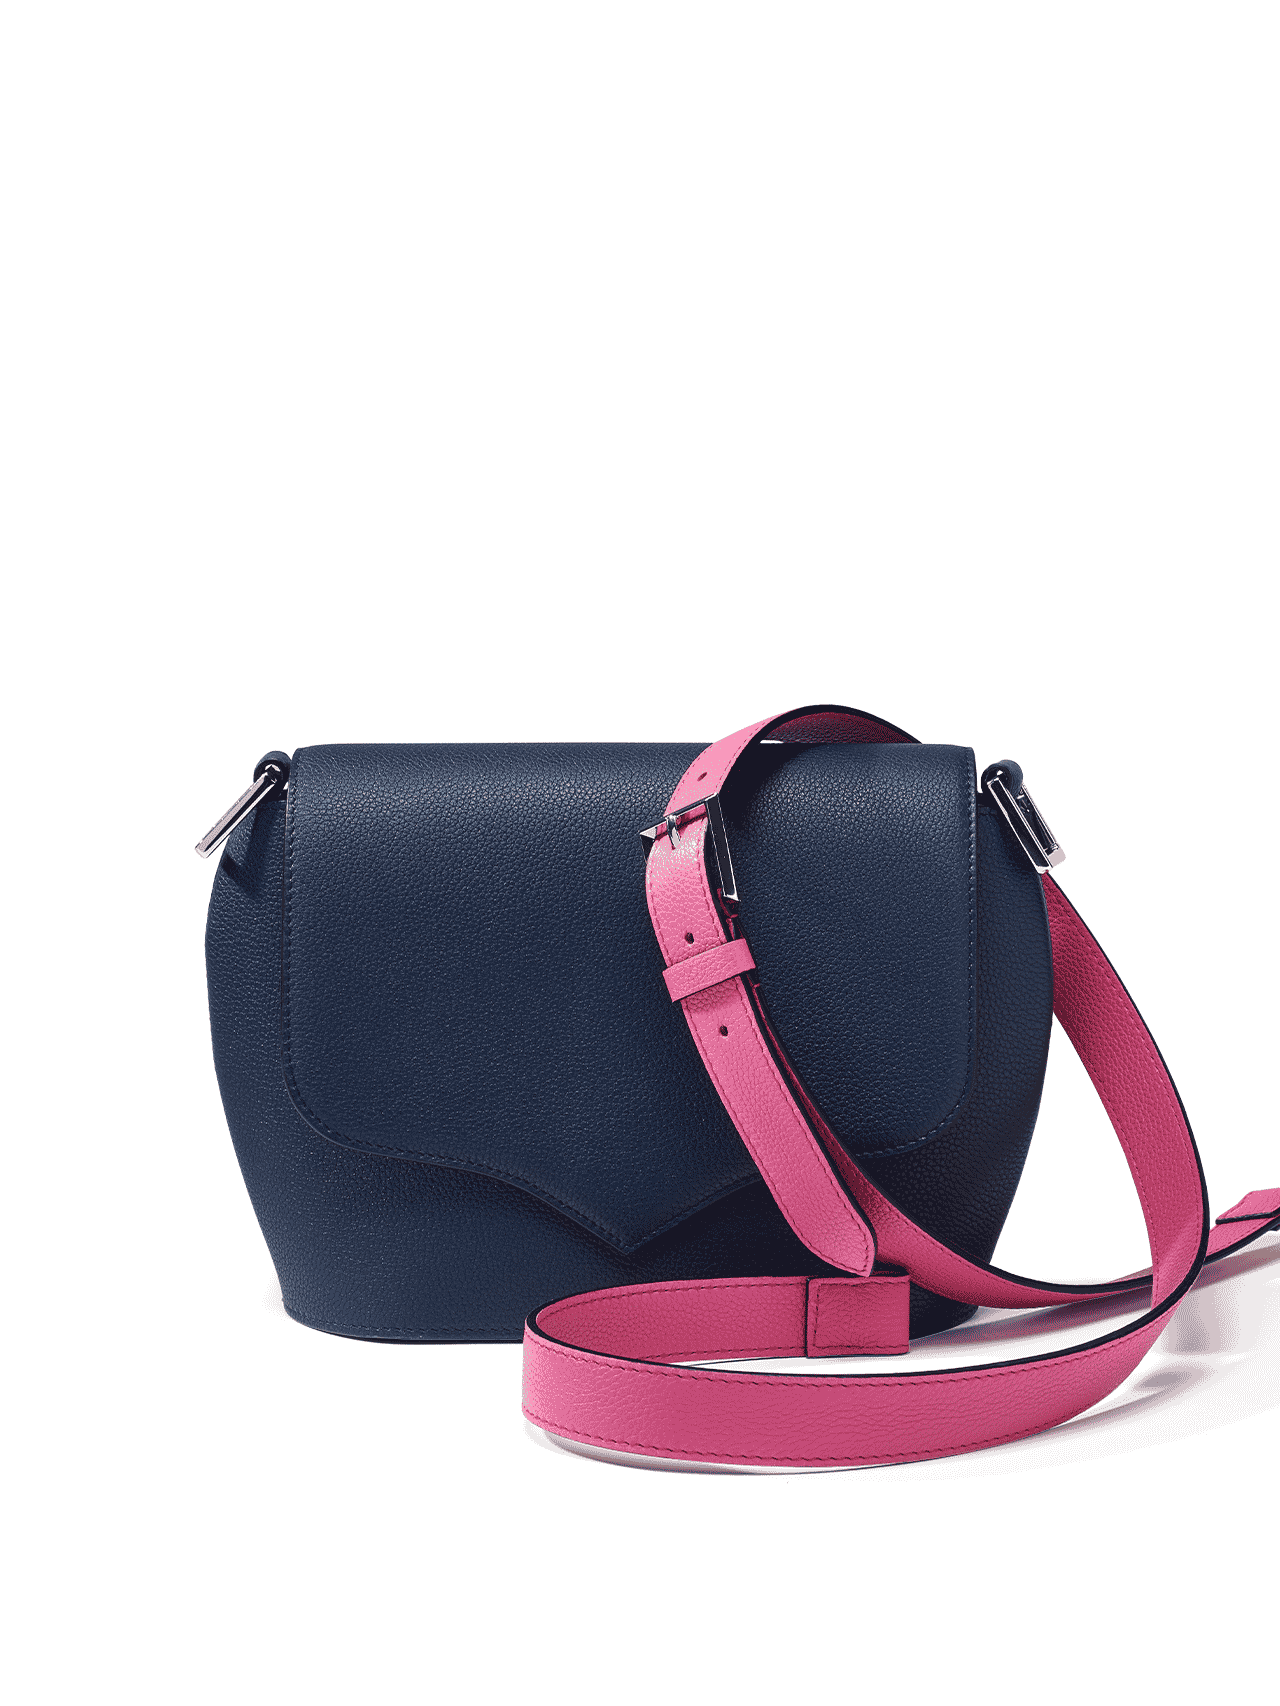 bag leather jean rousseau blue pink